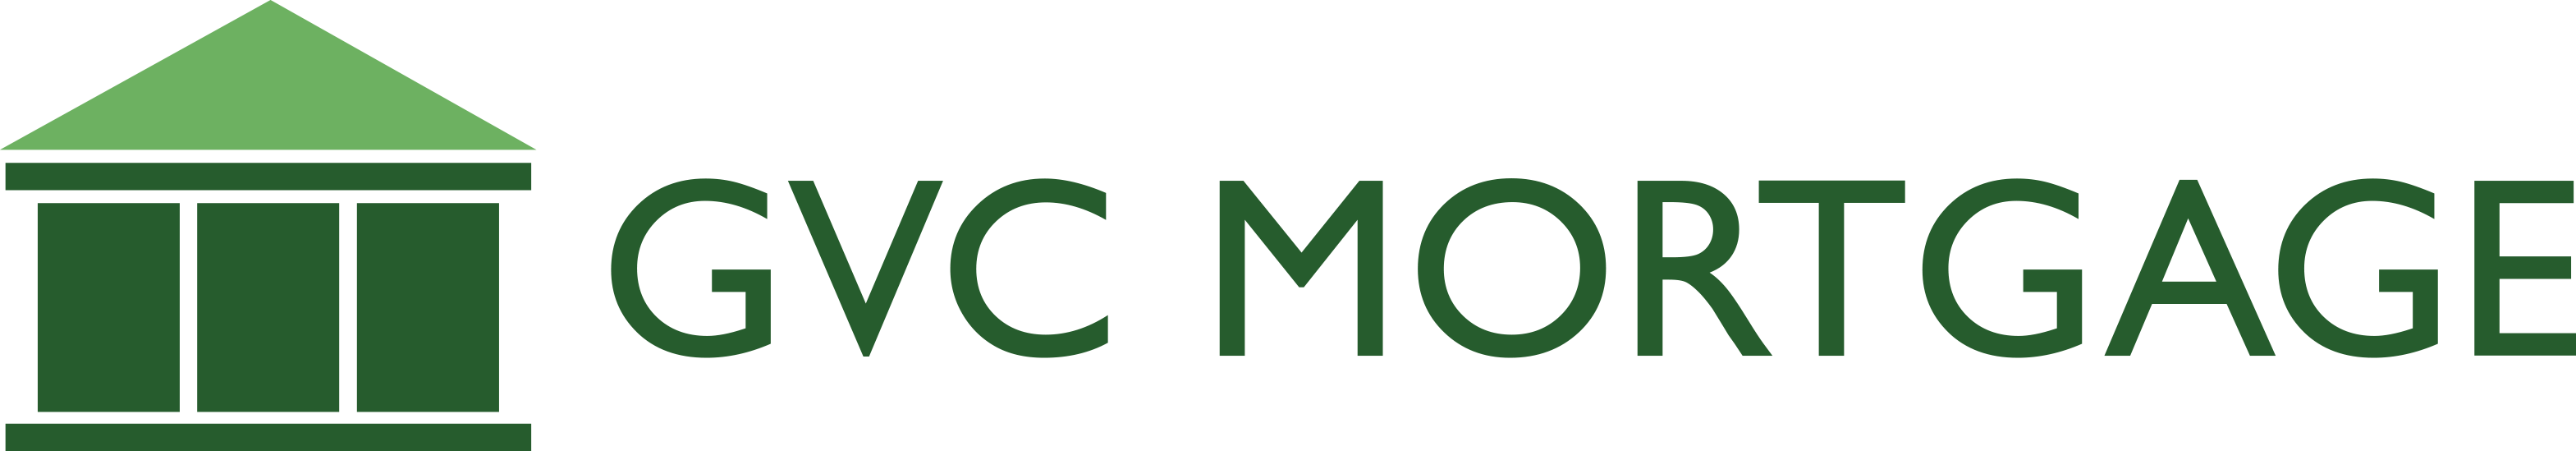 GVC Mortgage Company Logo